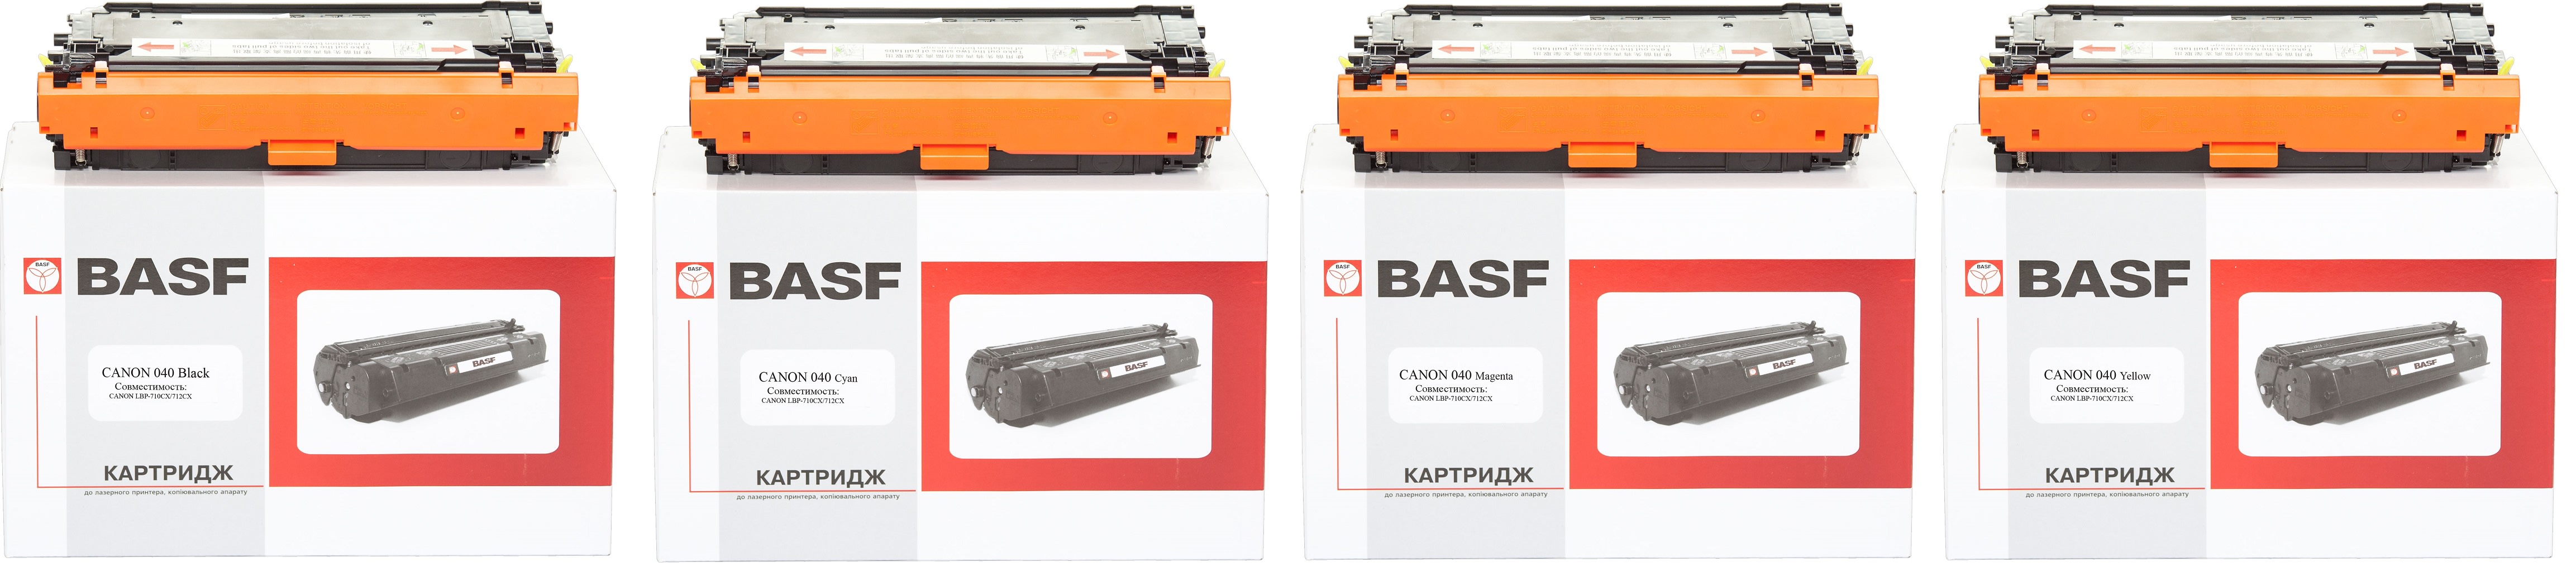 Картриджи BASF-KT-040 для Canon i-Sensys LBP-712cx Купить картриджи.